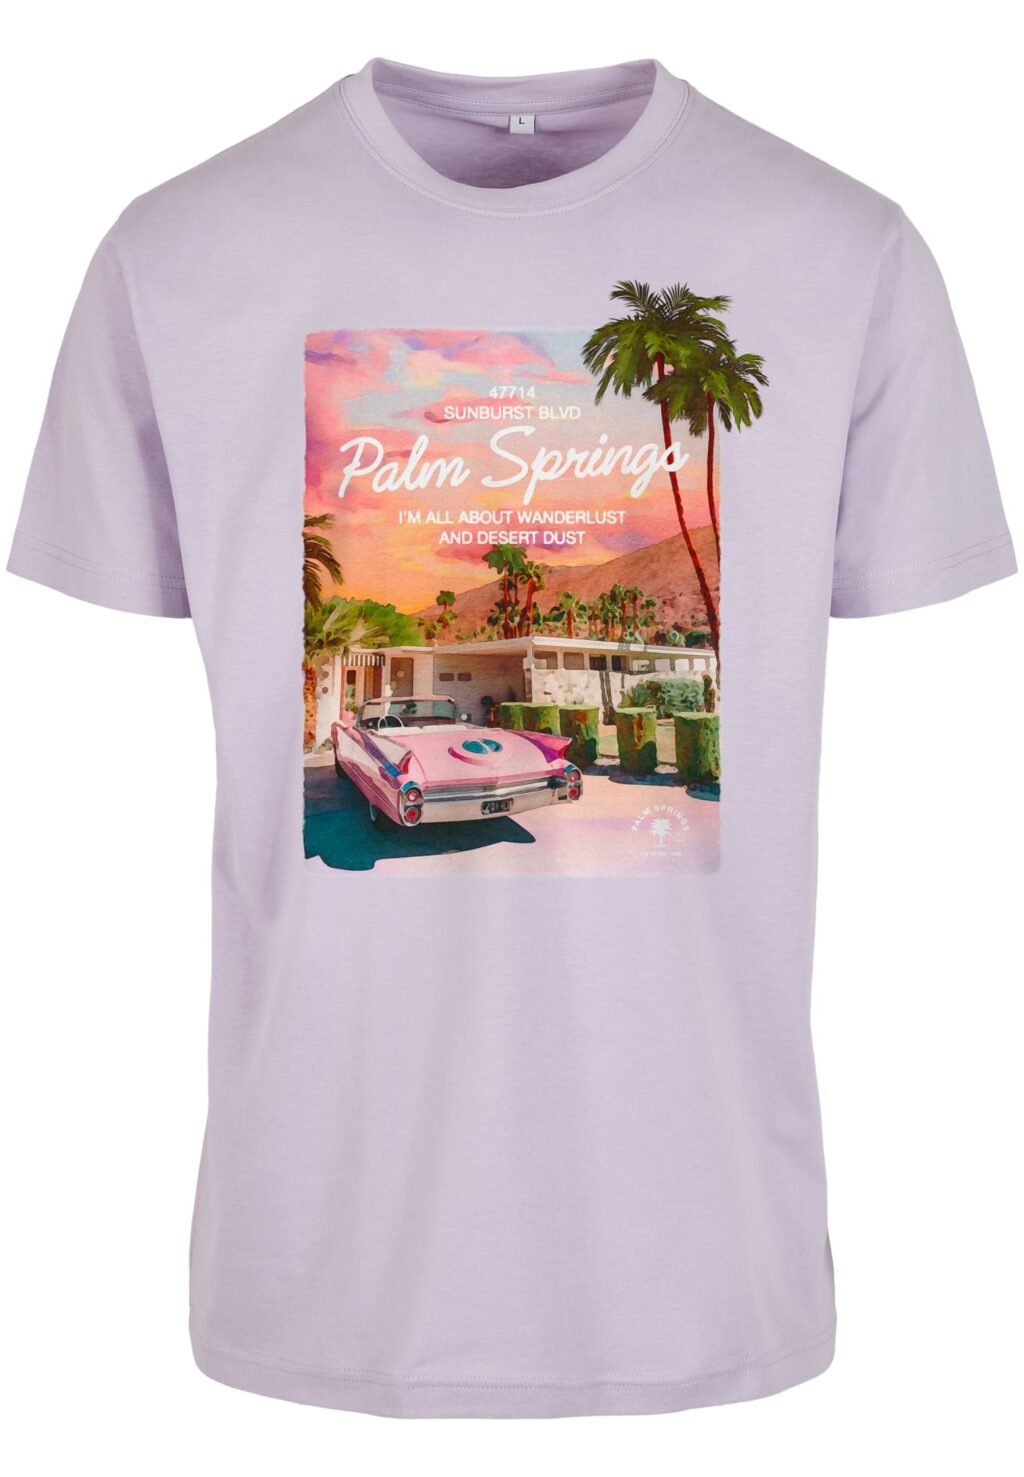 Palms Springs Tee lilac MT2499